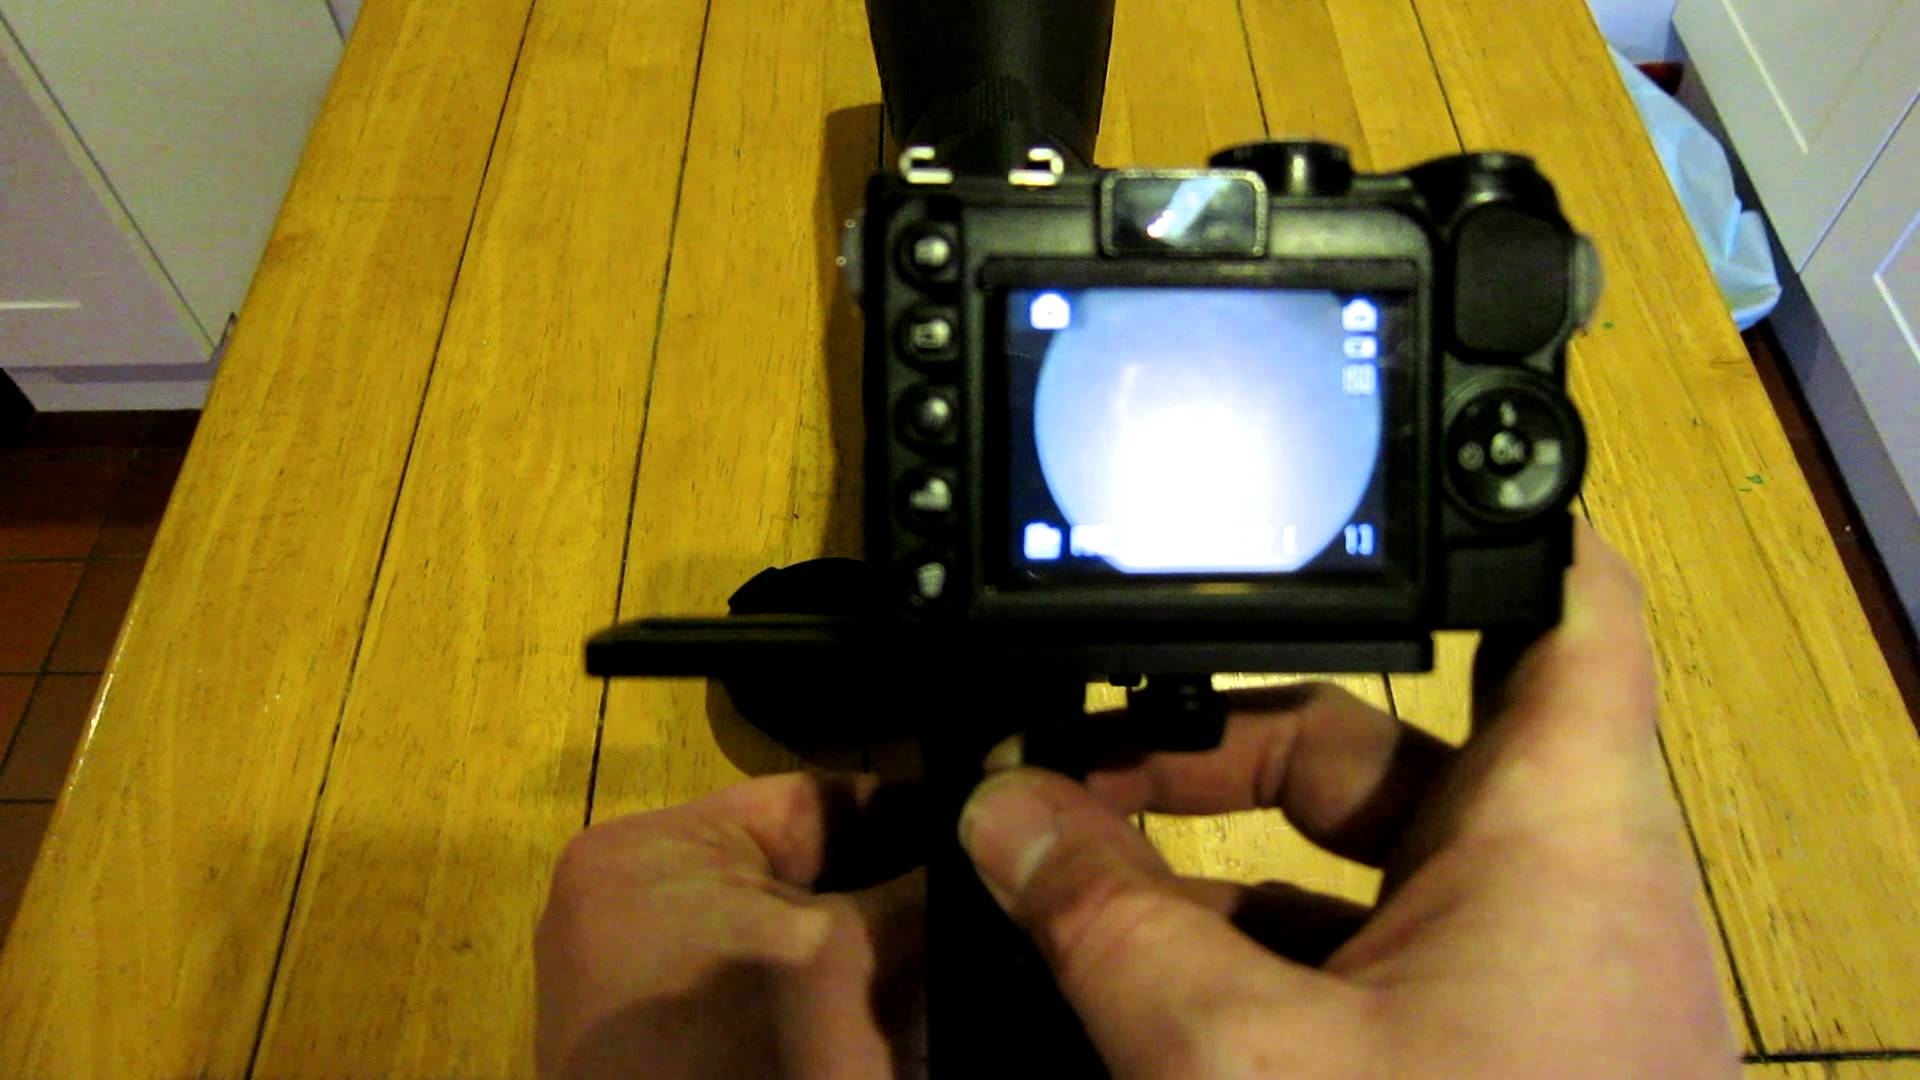 Zeiss Quick Compact Camera Digiscoping Adapter Set Up Video